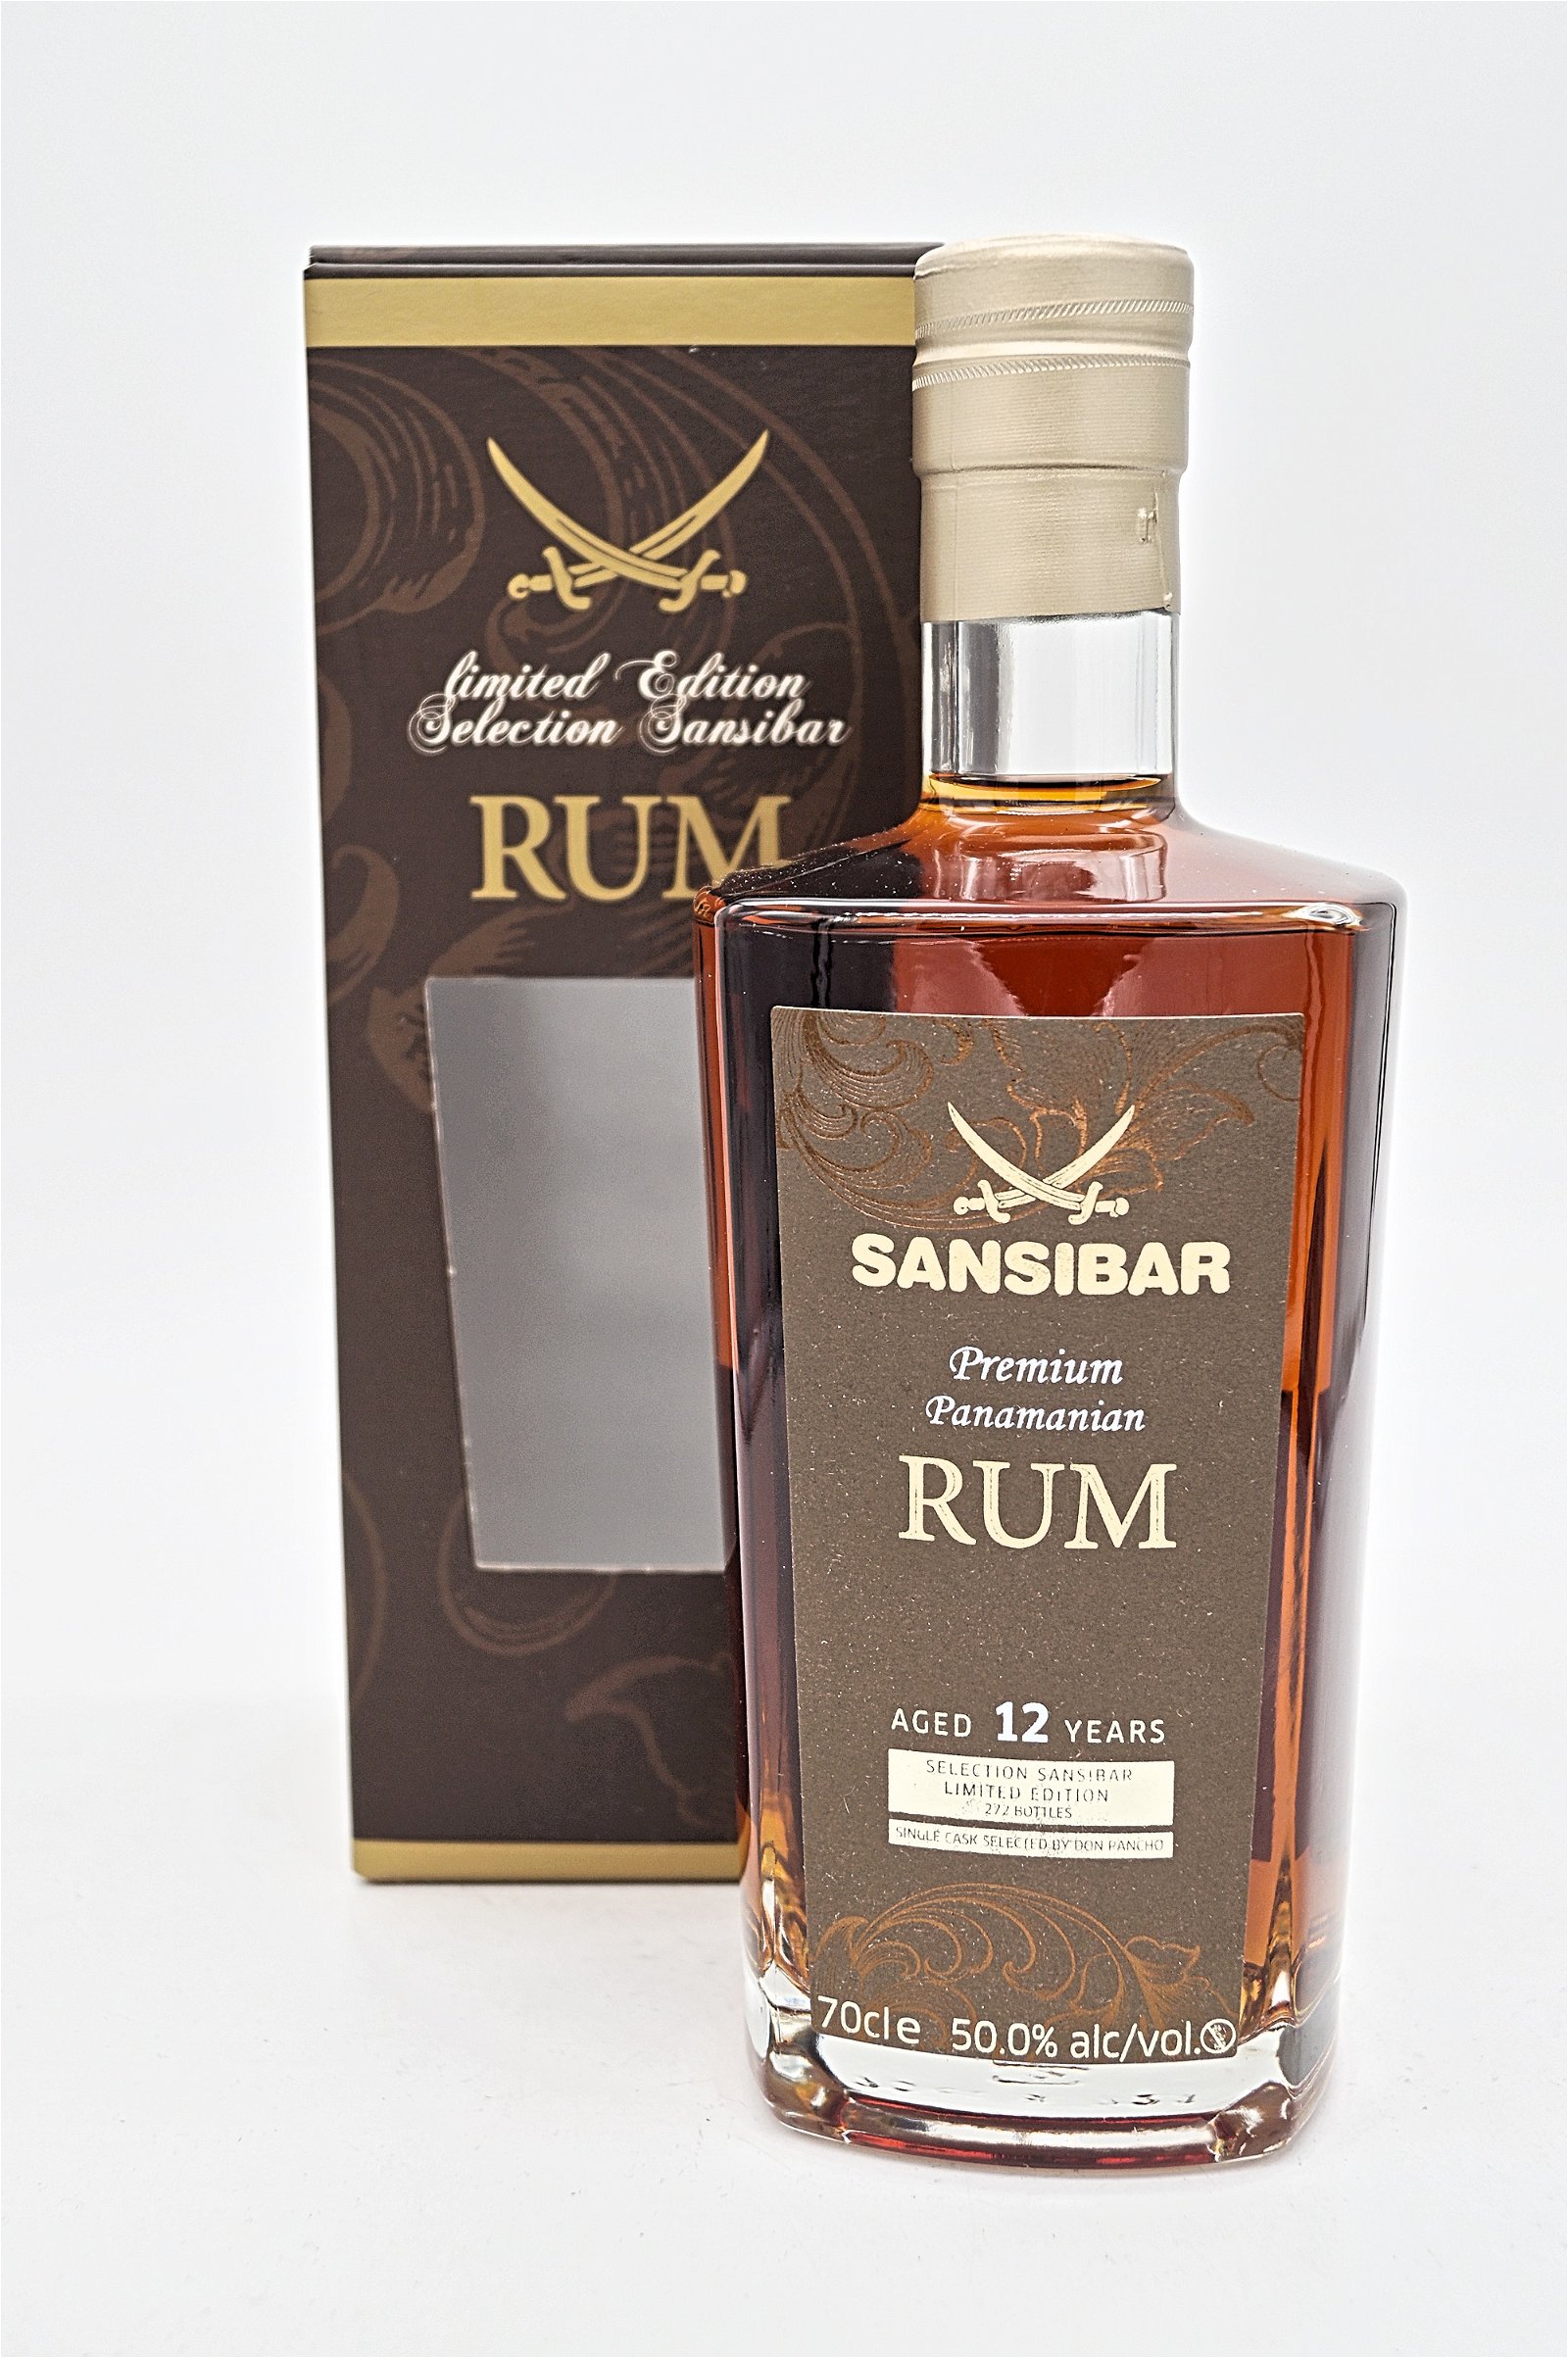 Sansibar Whisky 12 Jahre 2005/2017 Limited Edition Premium Panamanian Rum 